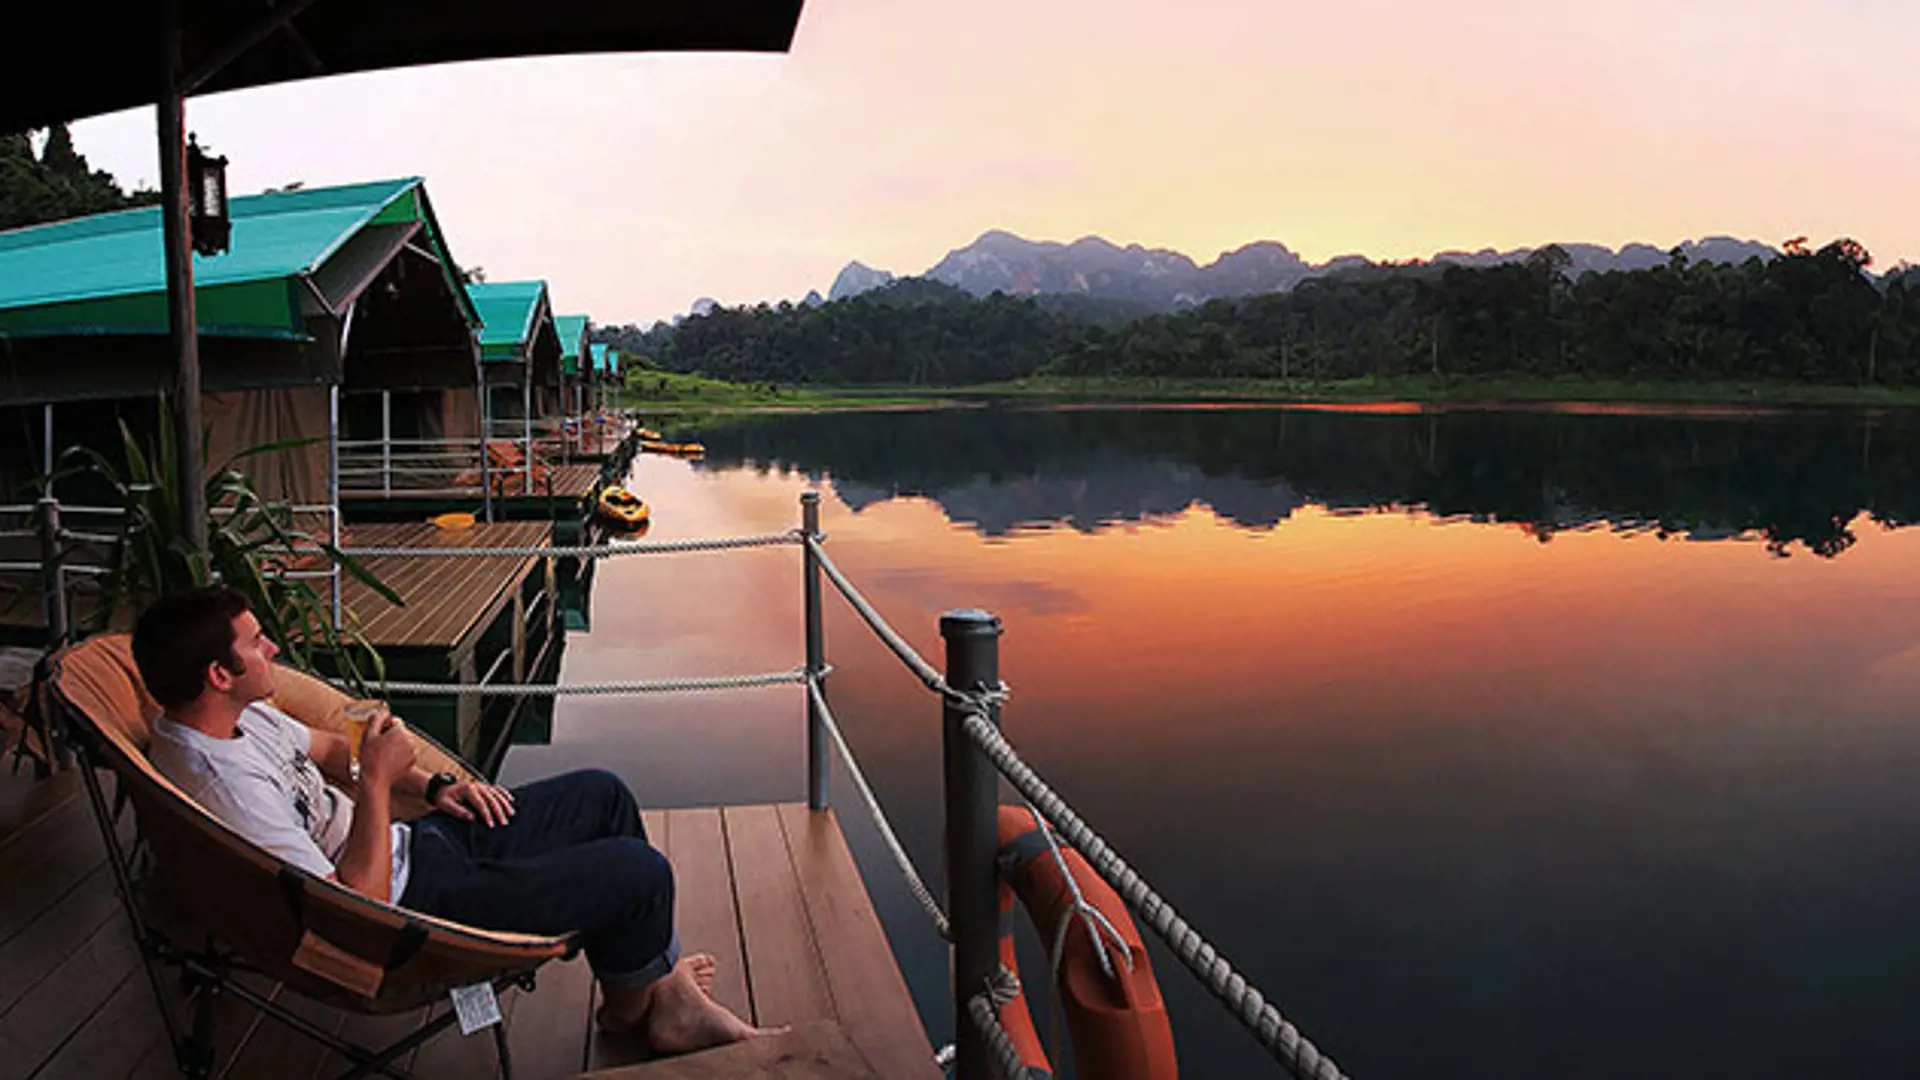 KHAO SOK - nyd solnedgangen over Cheow Larn søen fra din private terrasse og mærk den helt specielle stemning, Check Point Travel